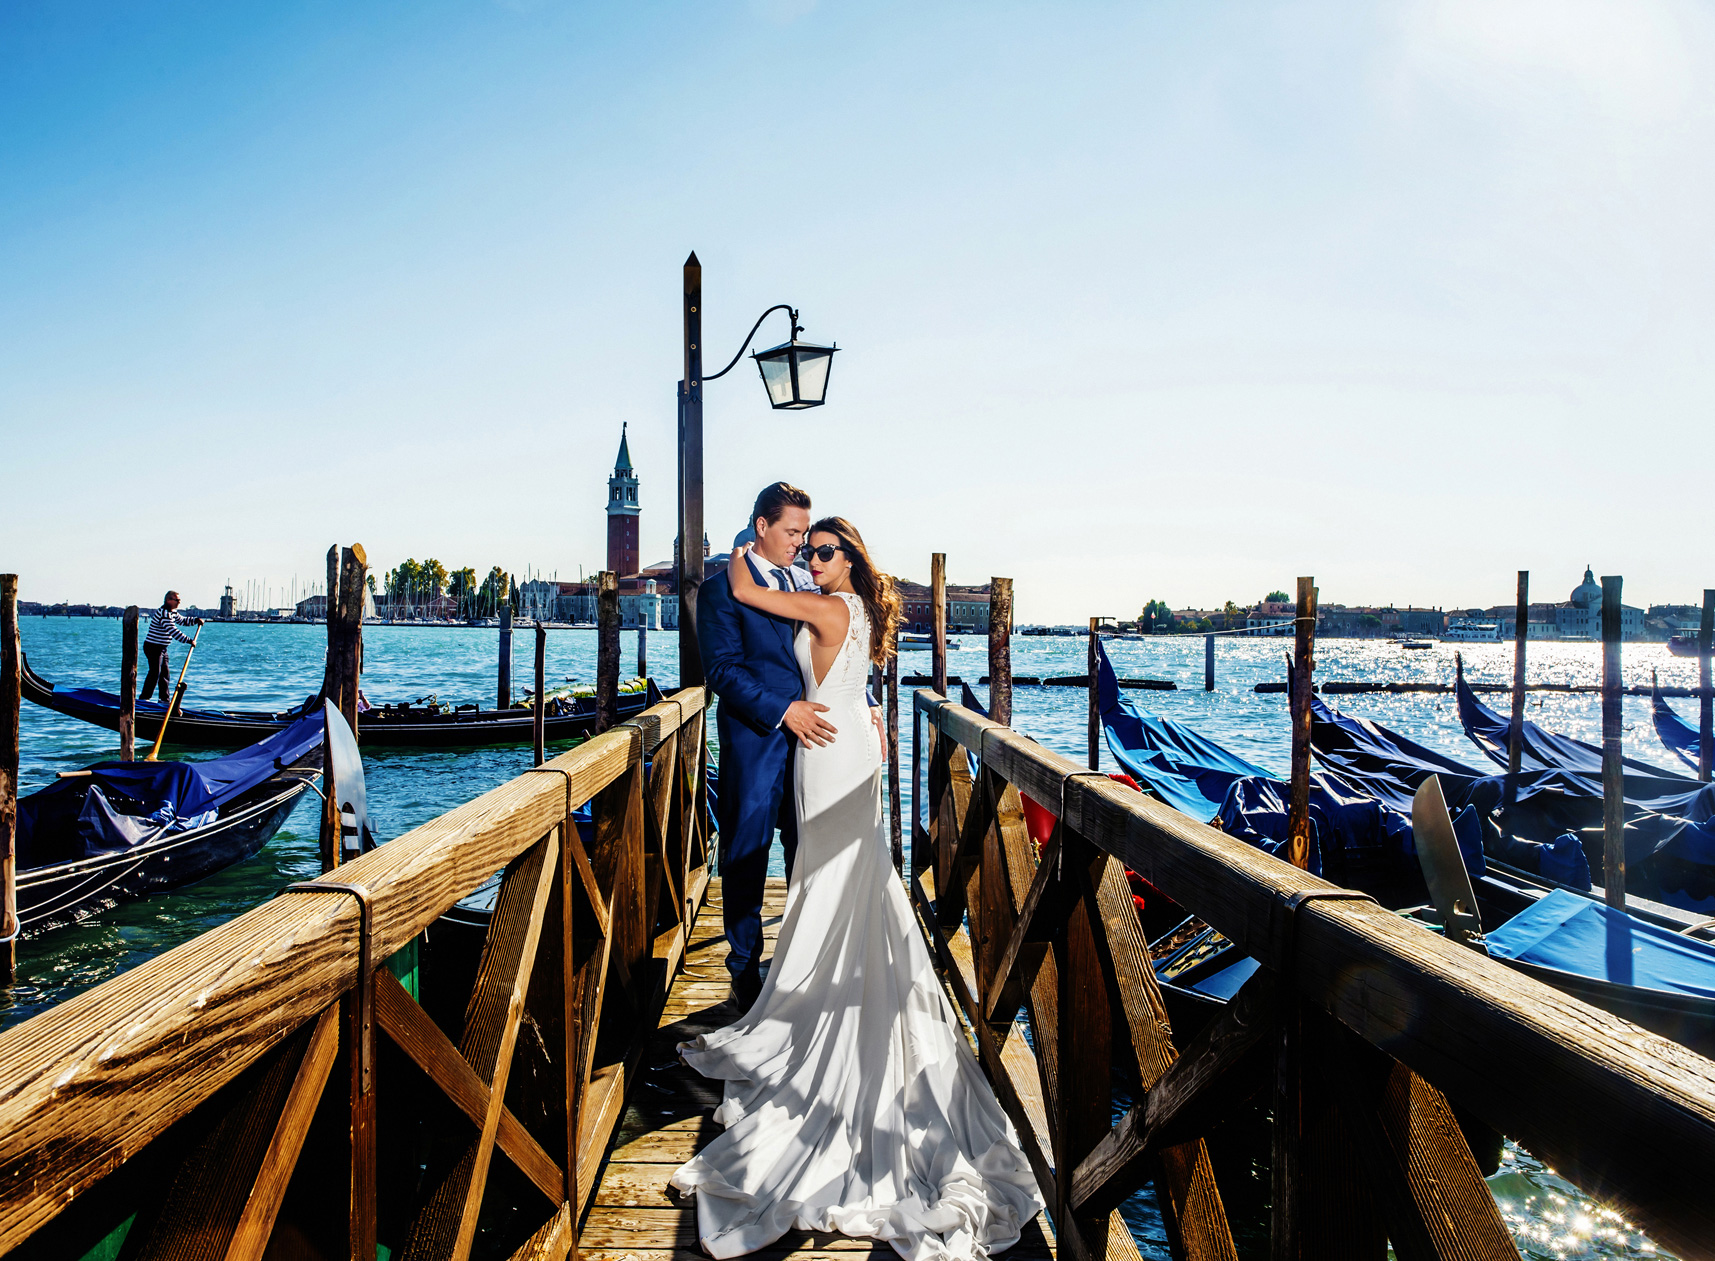 Post boda por Ginés López fotógrafos de boda en Murcía, en los muelles de Venecia.